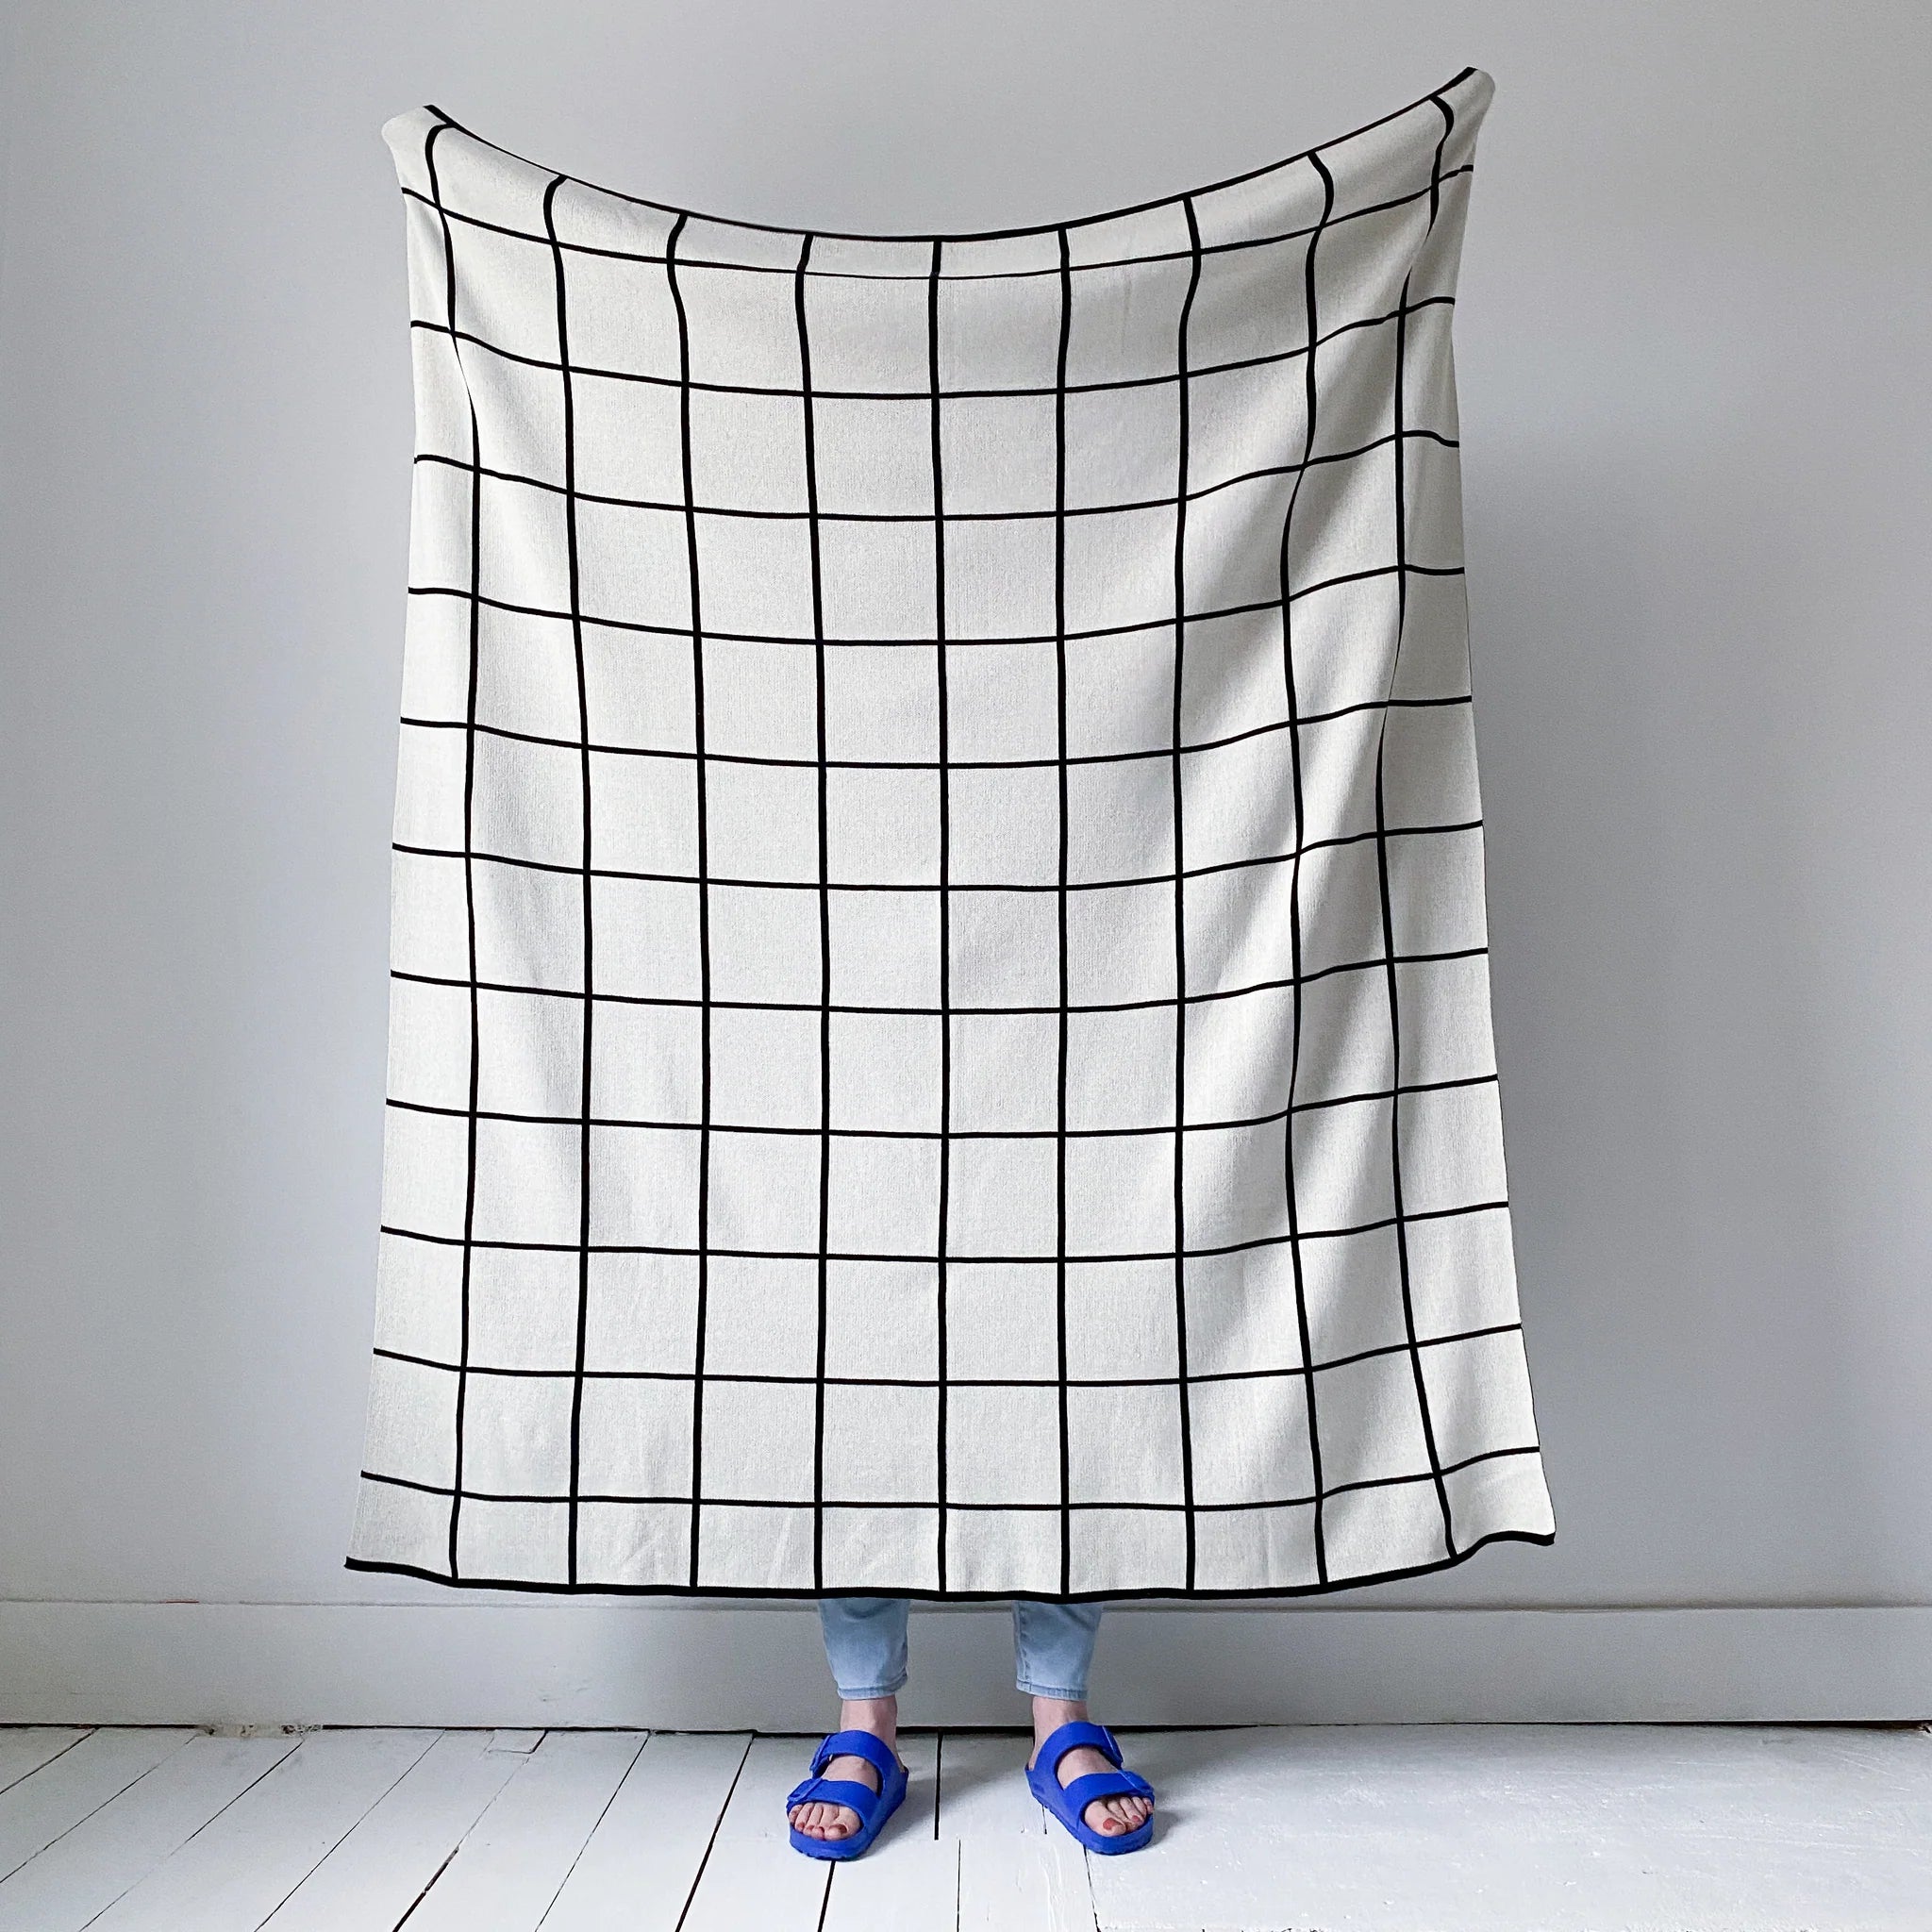 Sophie Home: Cotton Knit Grid Blanket